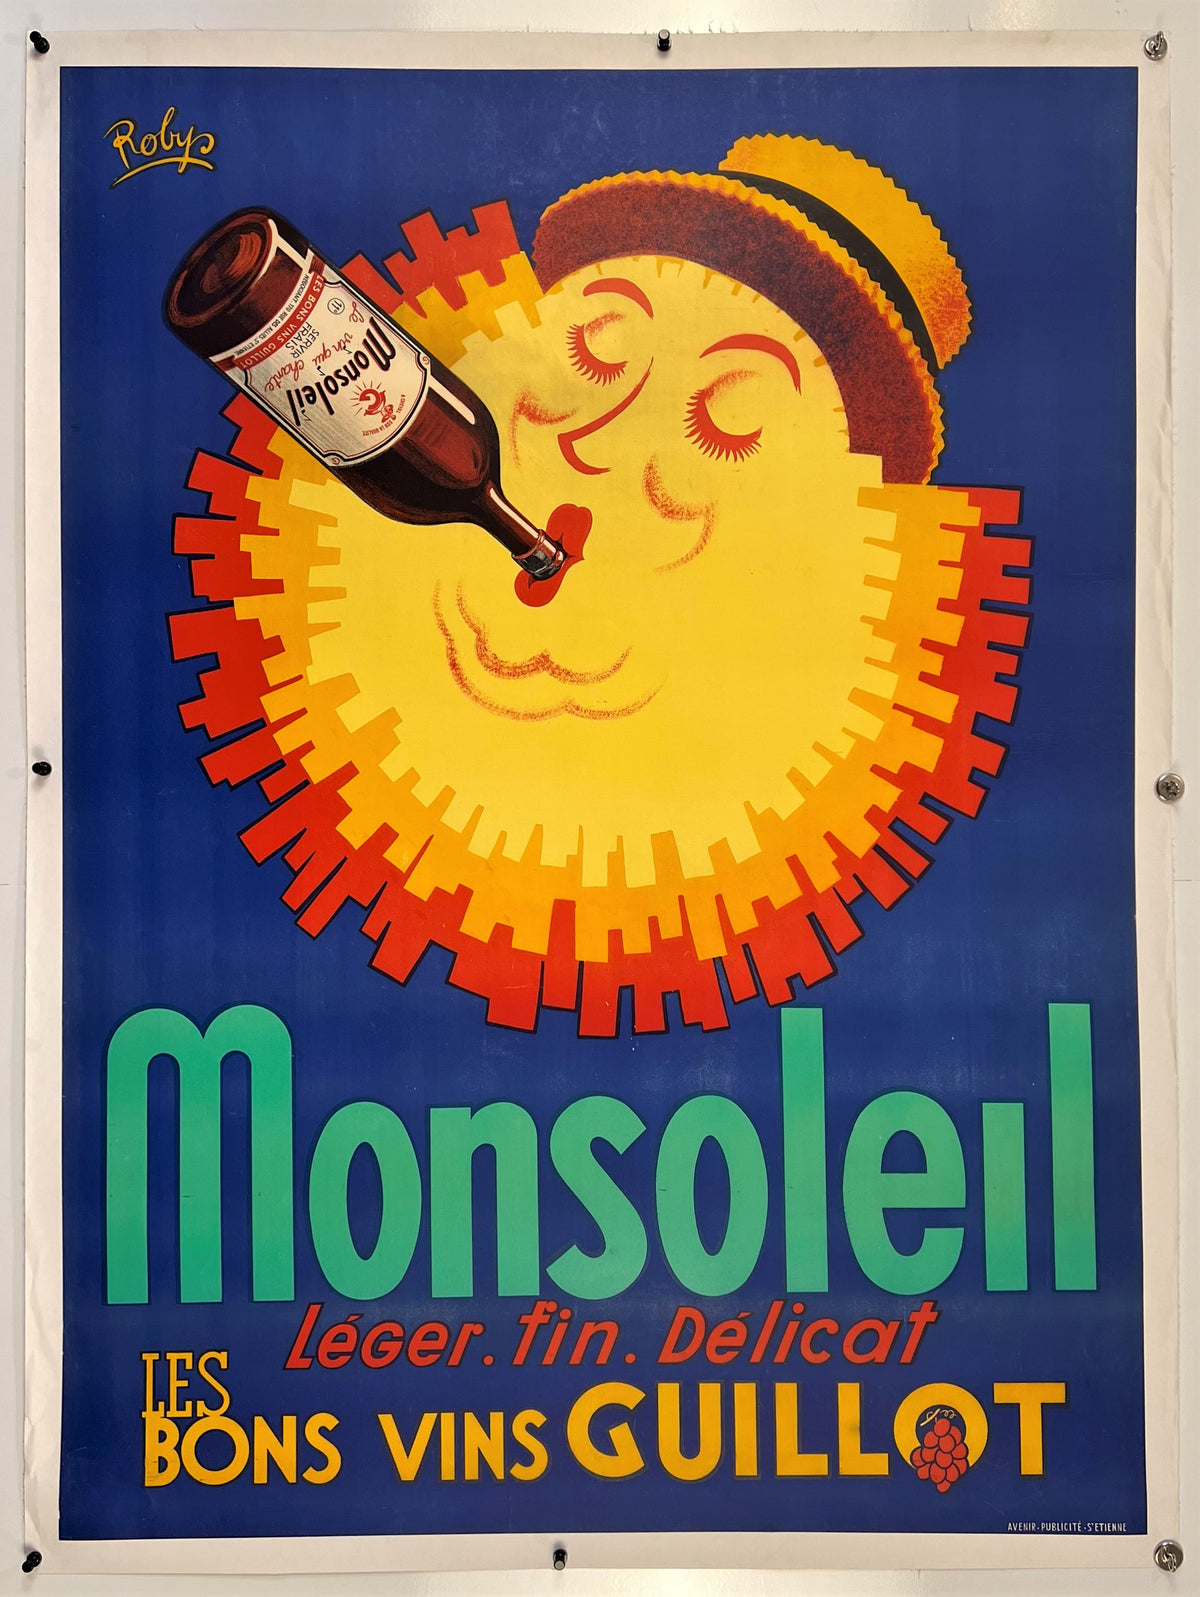 Monsoleil Wine - Authentic Vintage Poster